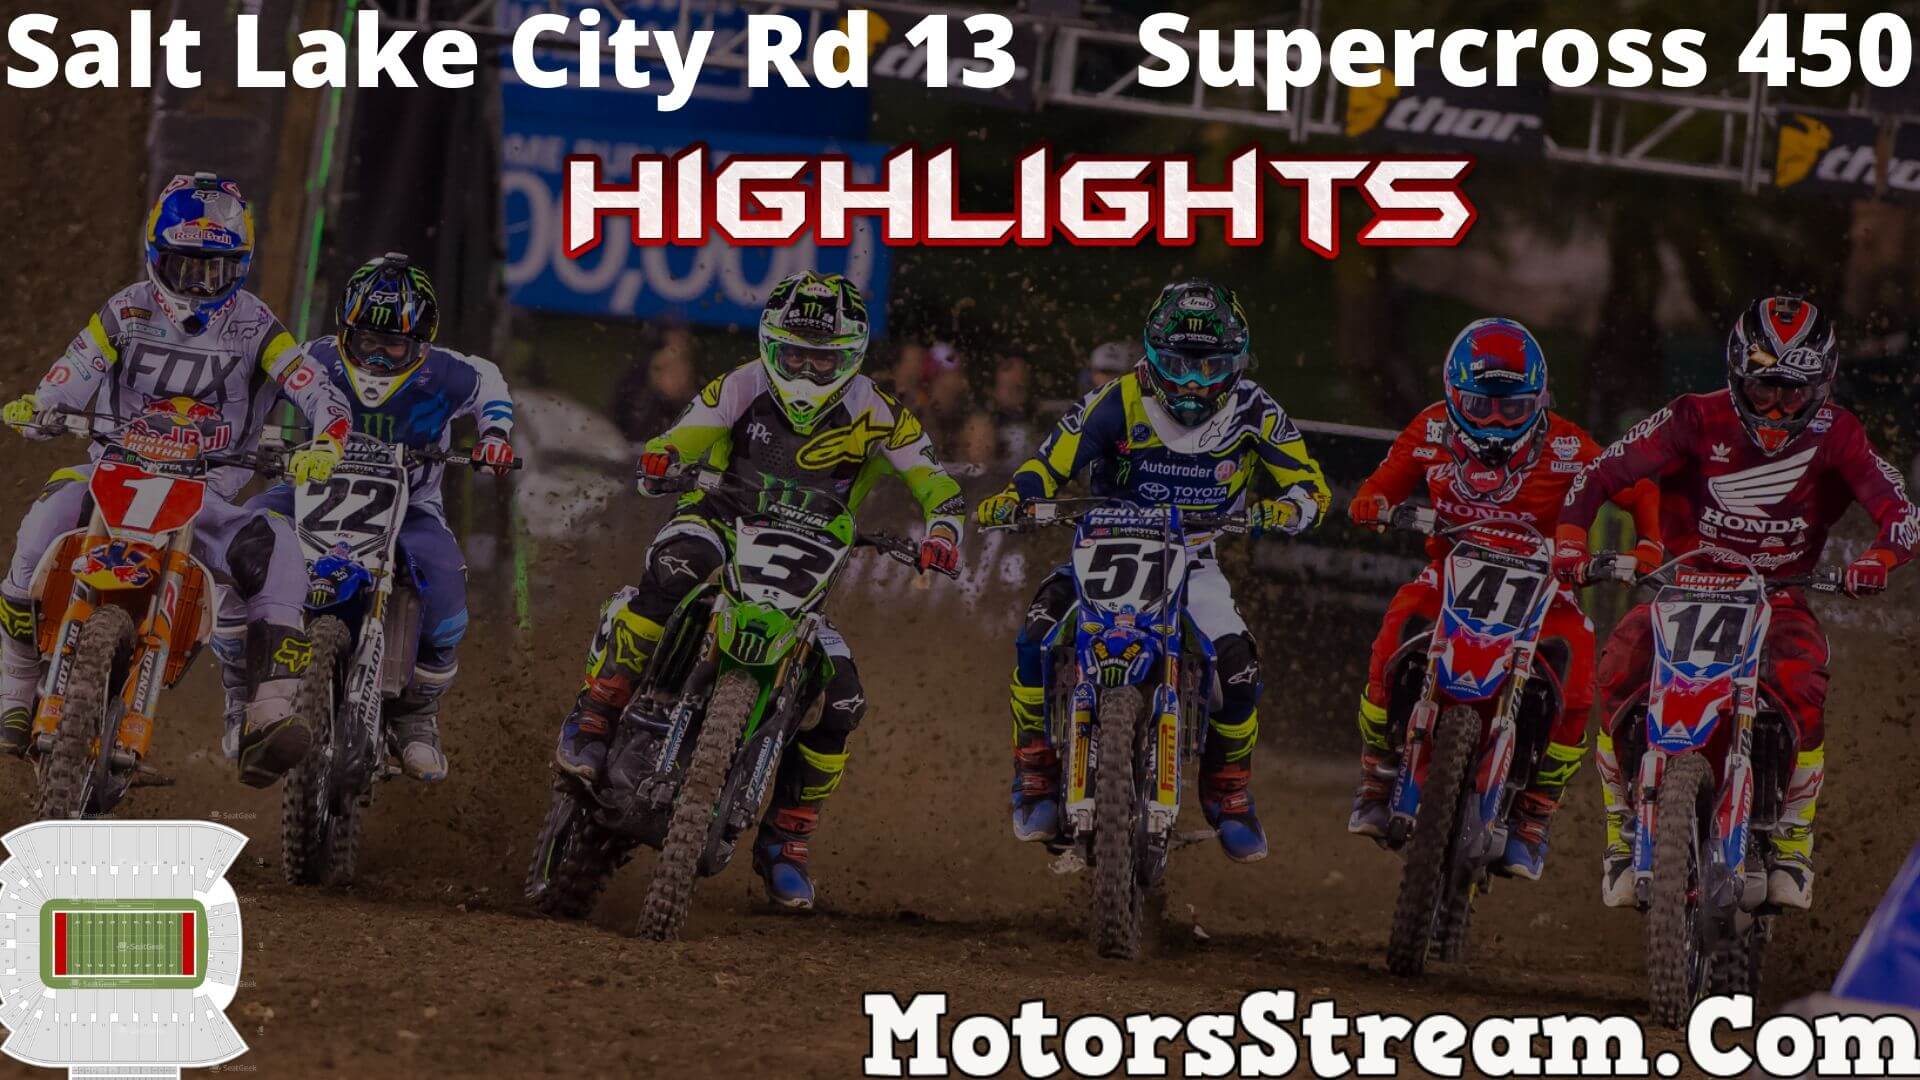 Salt Lake City Rd 13 Highlights 2020 Supercross 450